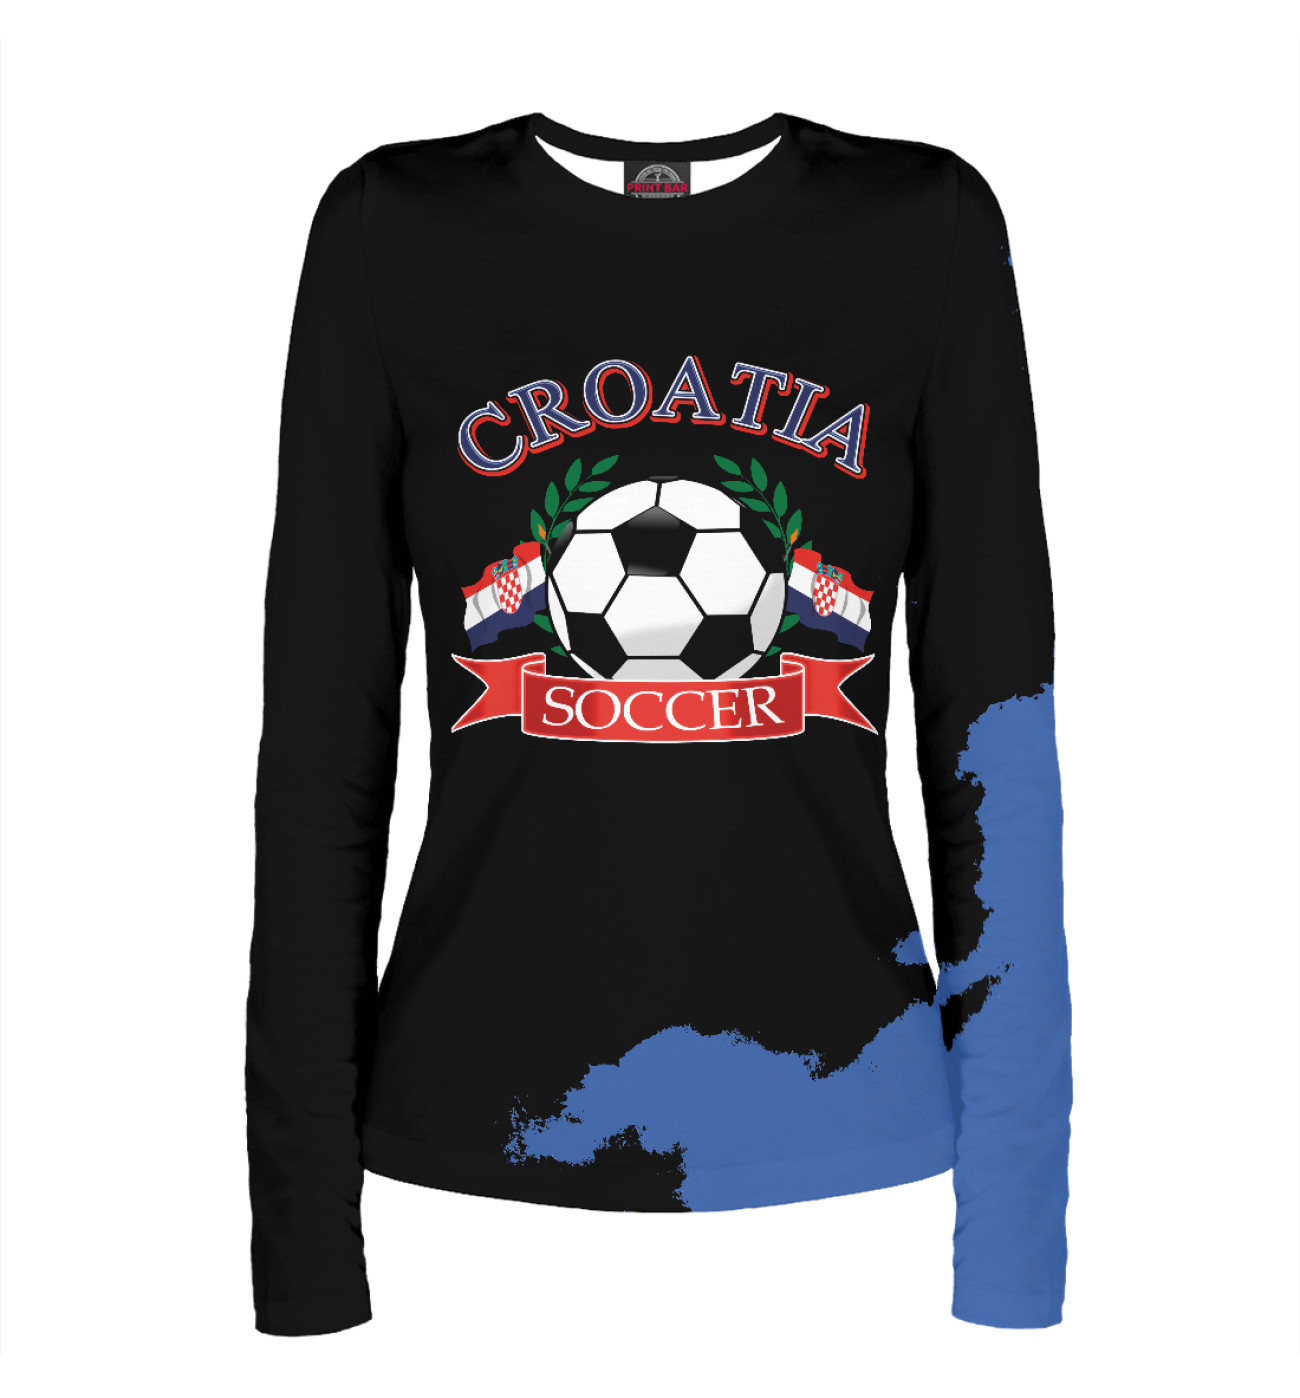 Женский Лонгслив Croatia soccer ball, артикул: FTO-670002-lon-1